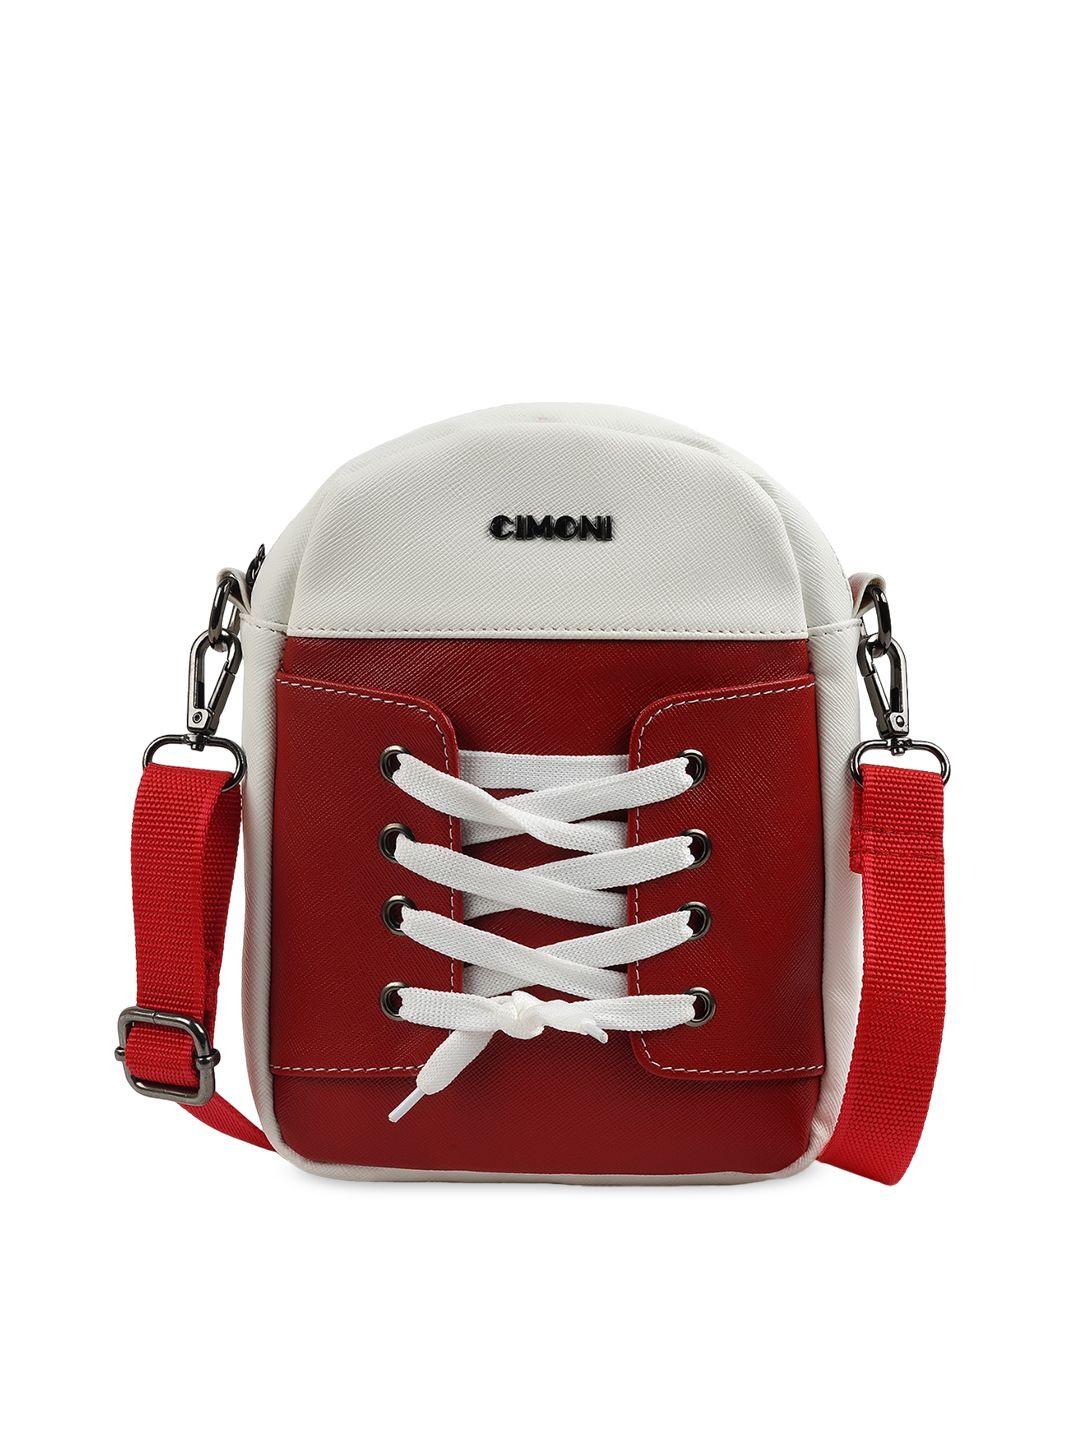 cimoni textured structured sling bag